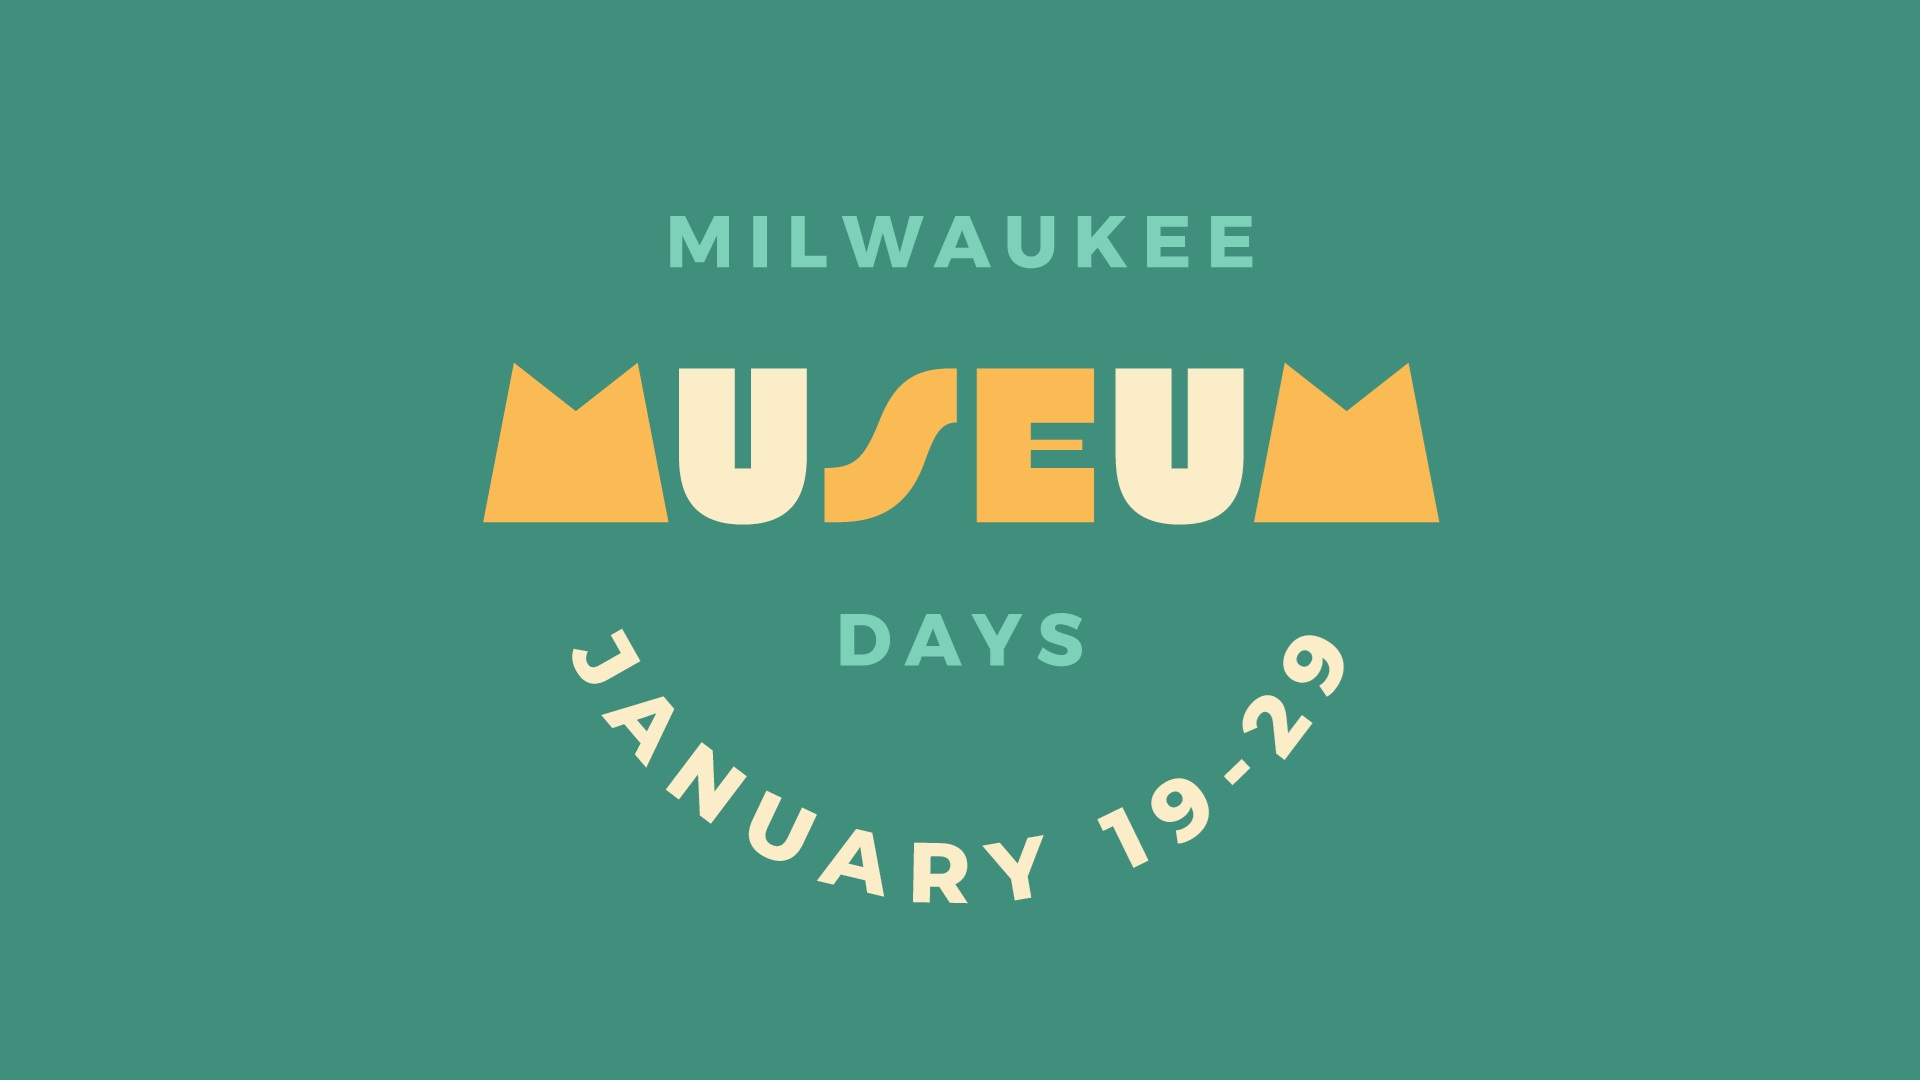 Museum Days Returns to Milwaukee